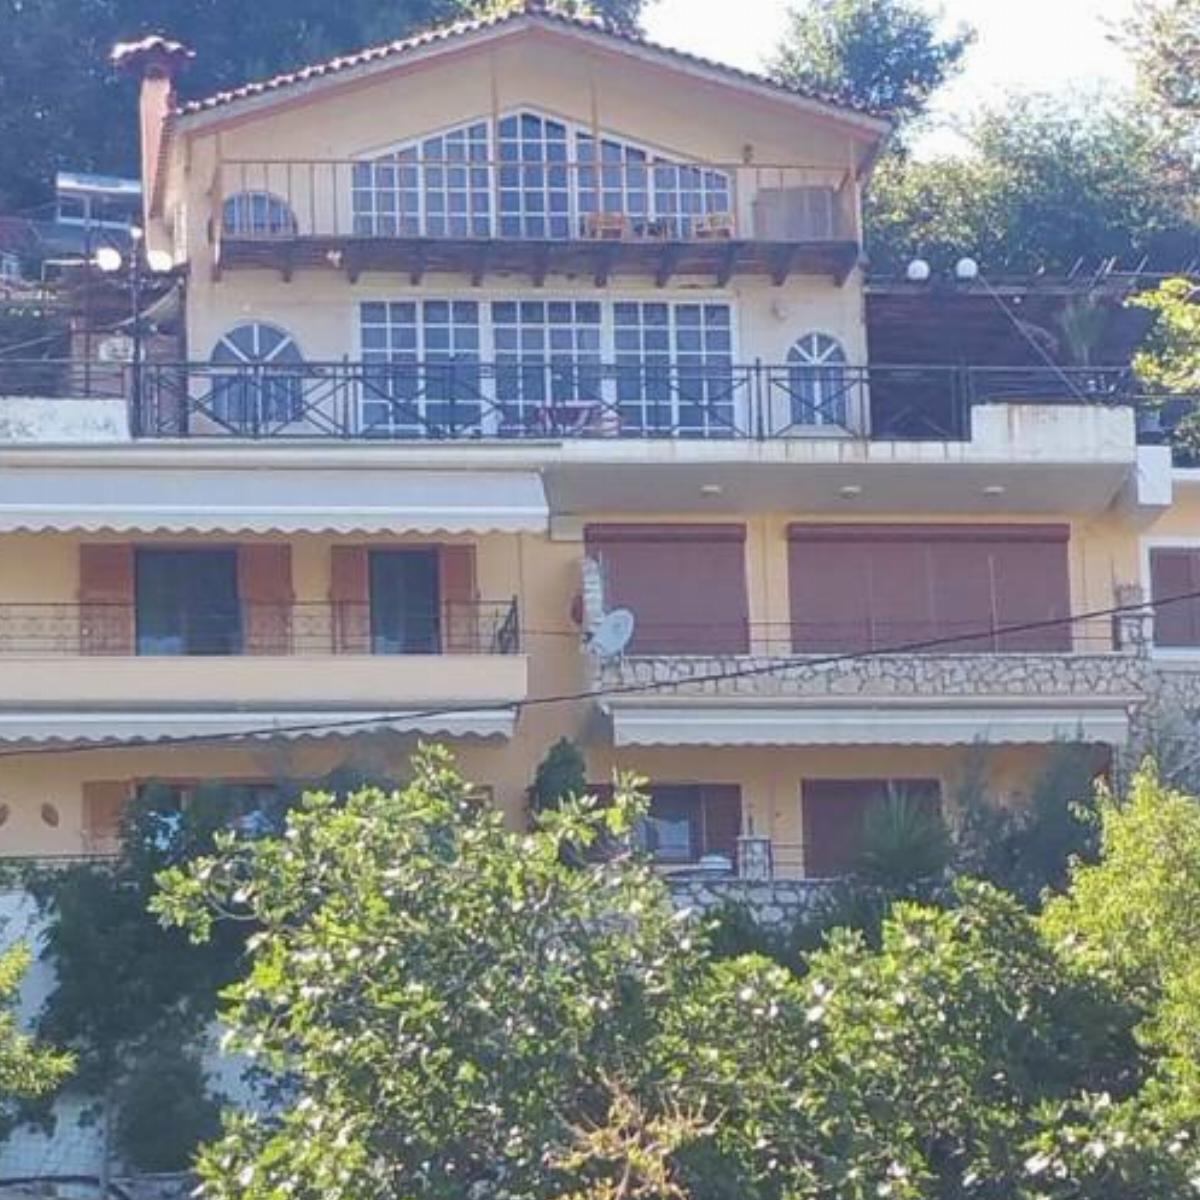 Balkony of Kalamata Hotel Kalamata Greece